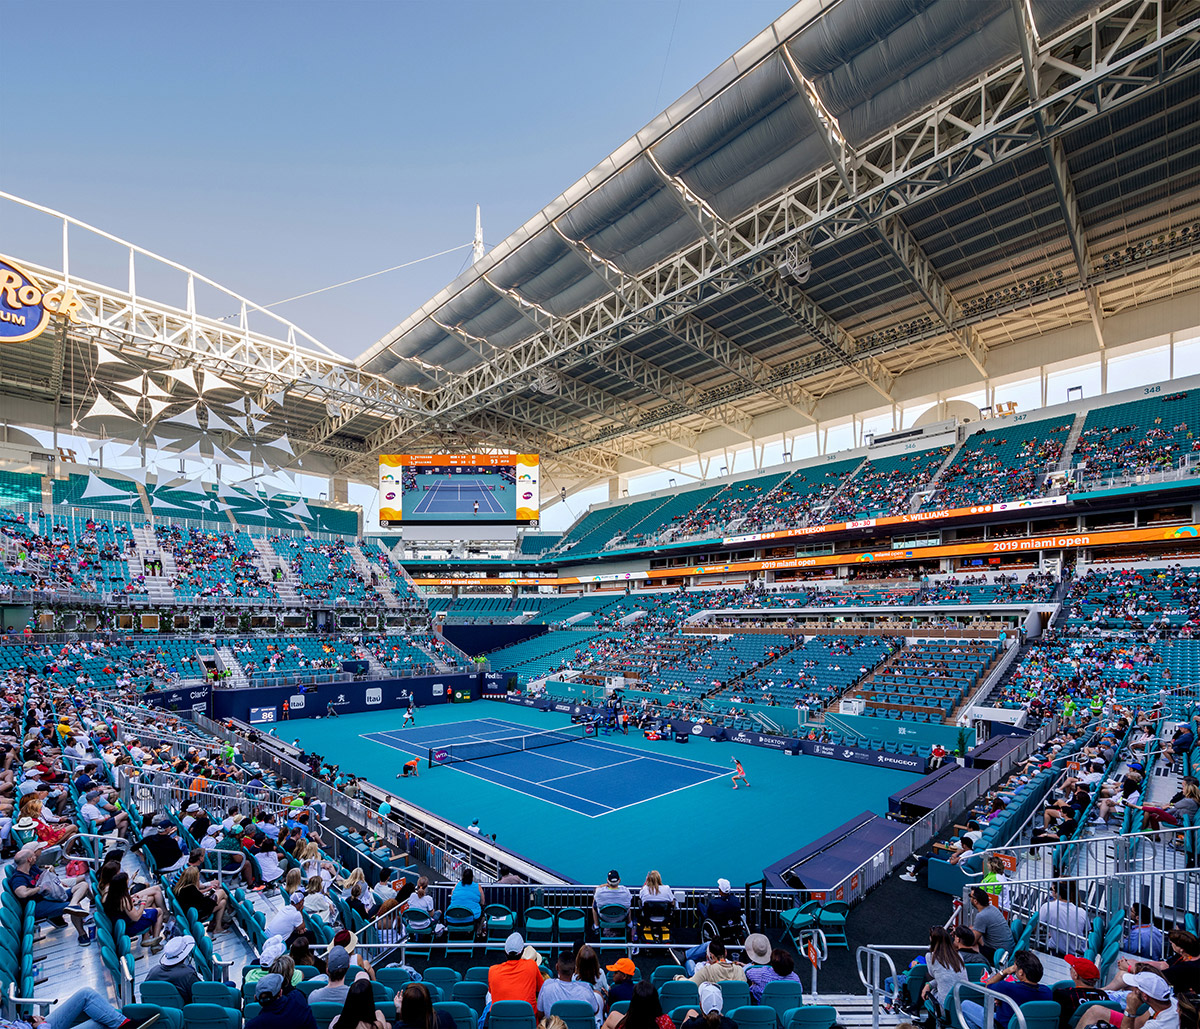 ROSSETTI designed a partialpopup tennis stadium for the Miami Open